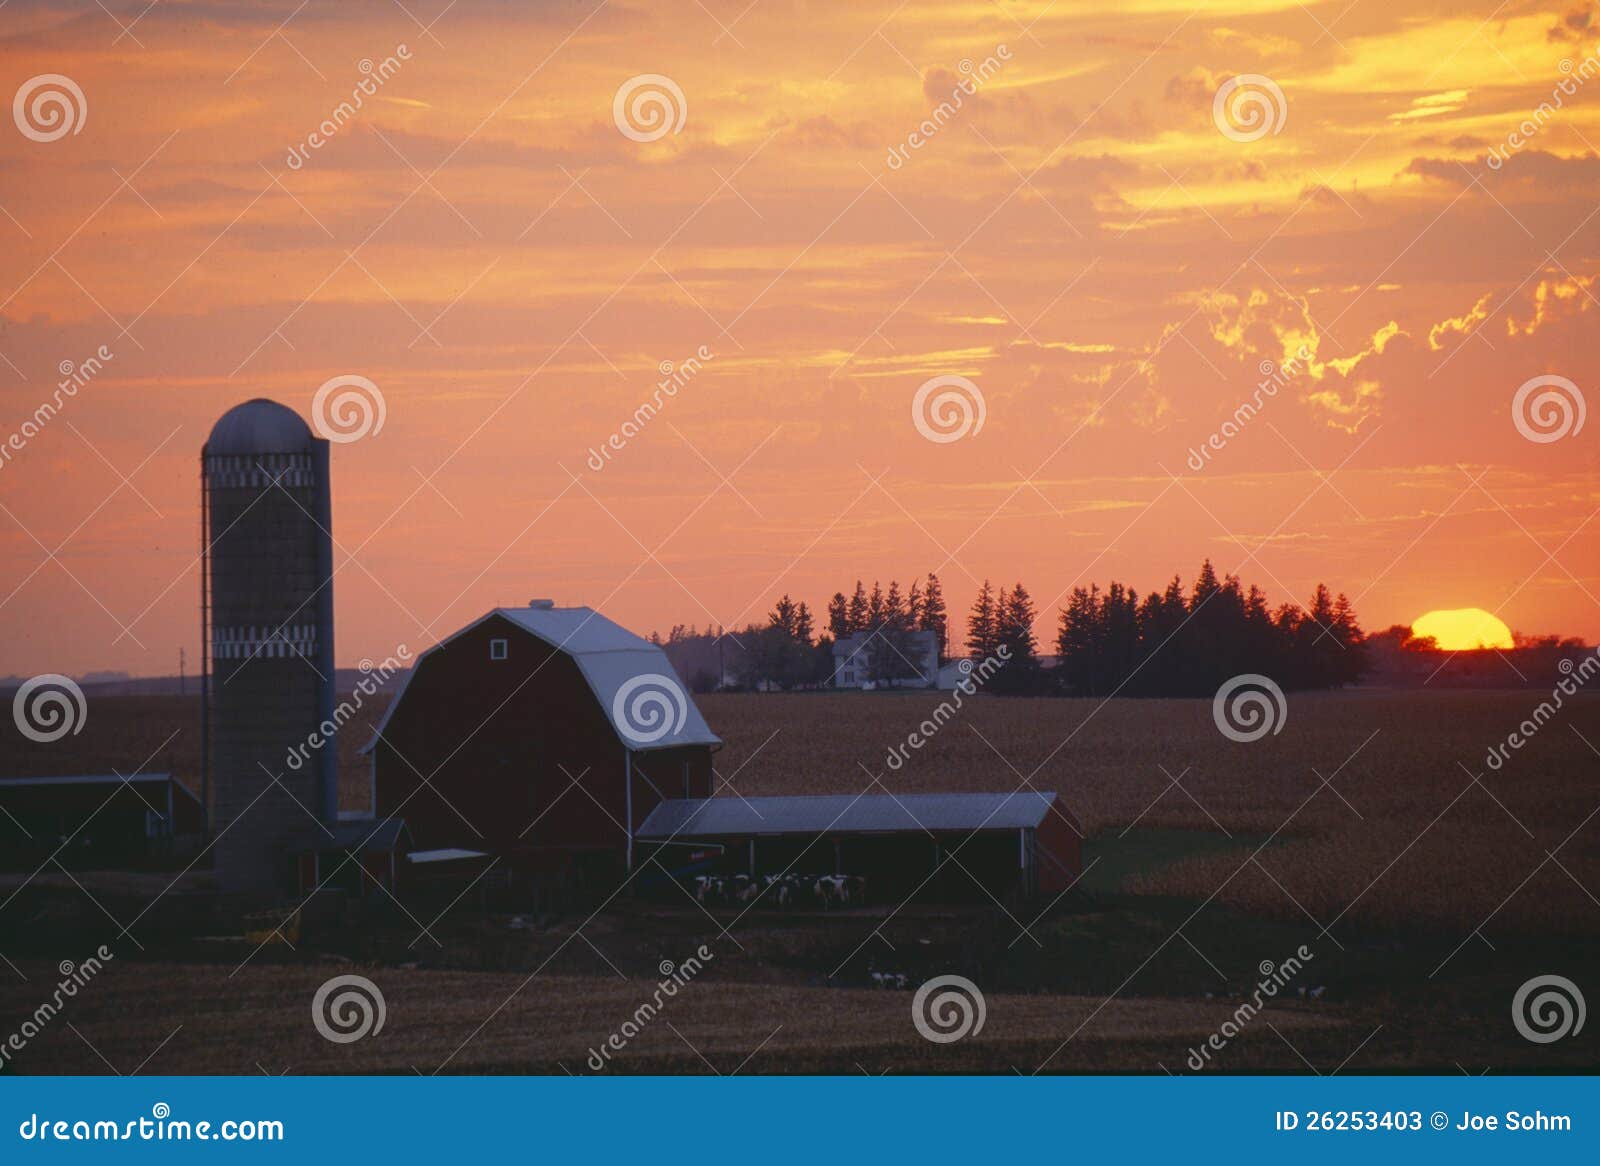 barn and silo at sunset